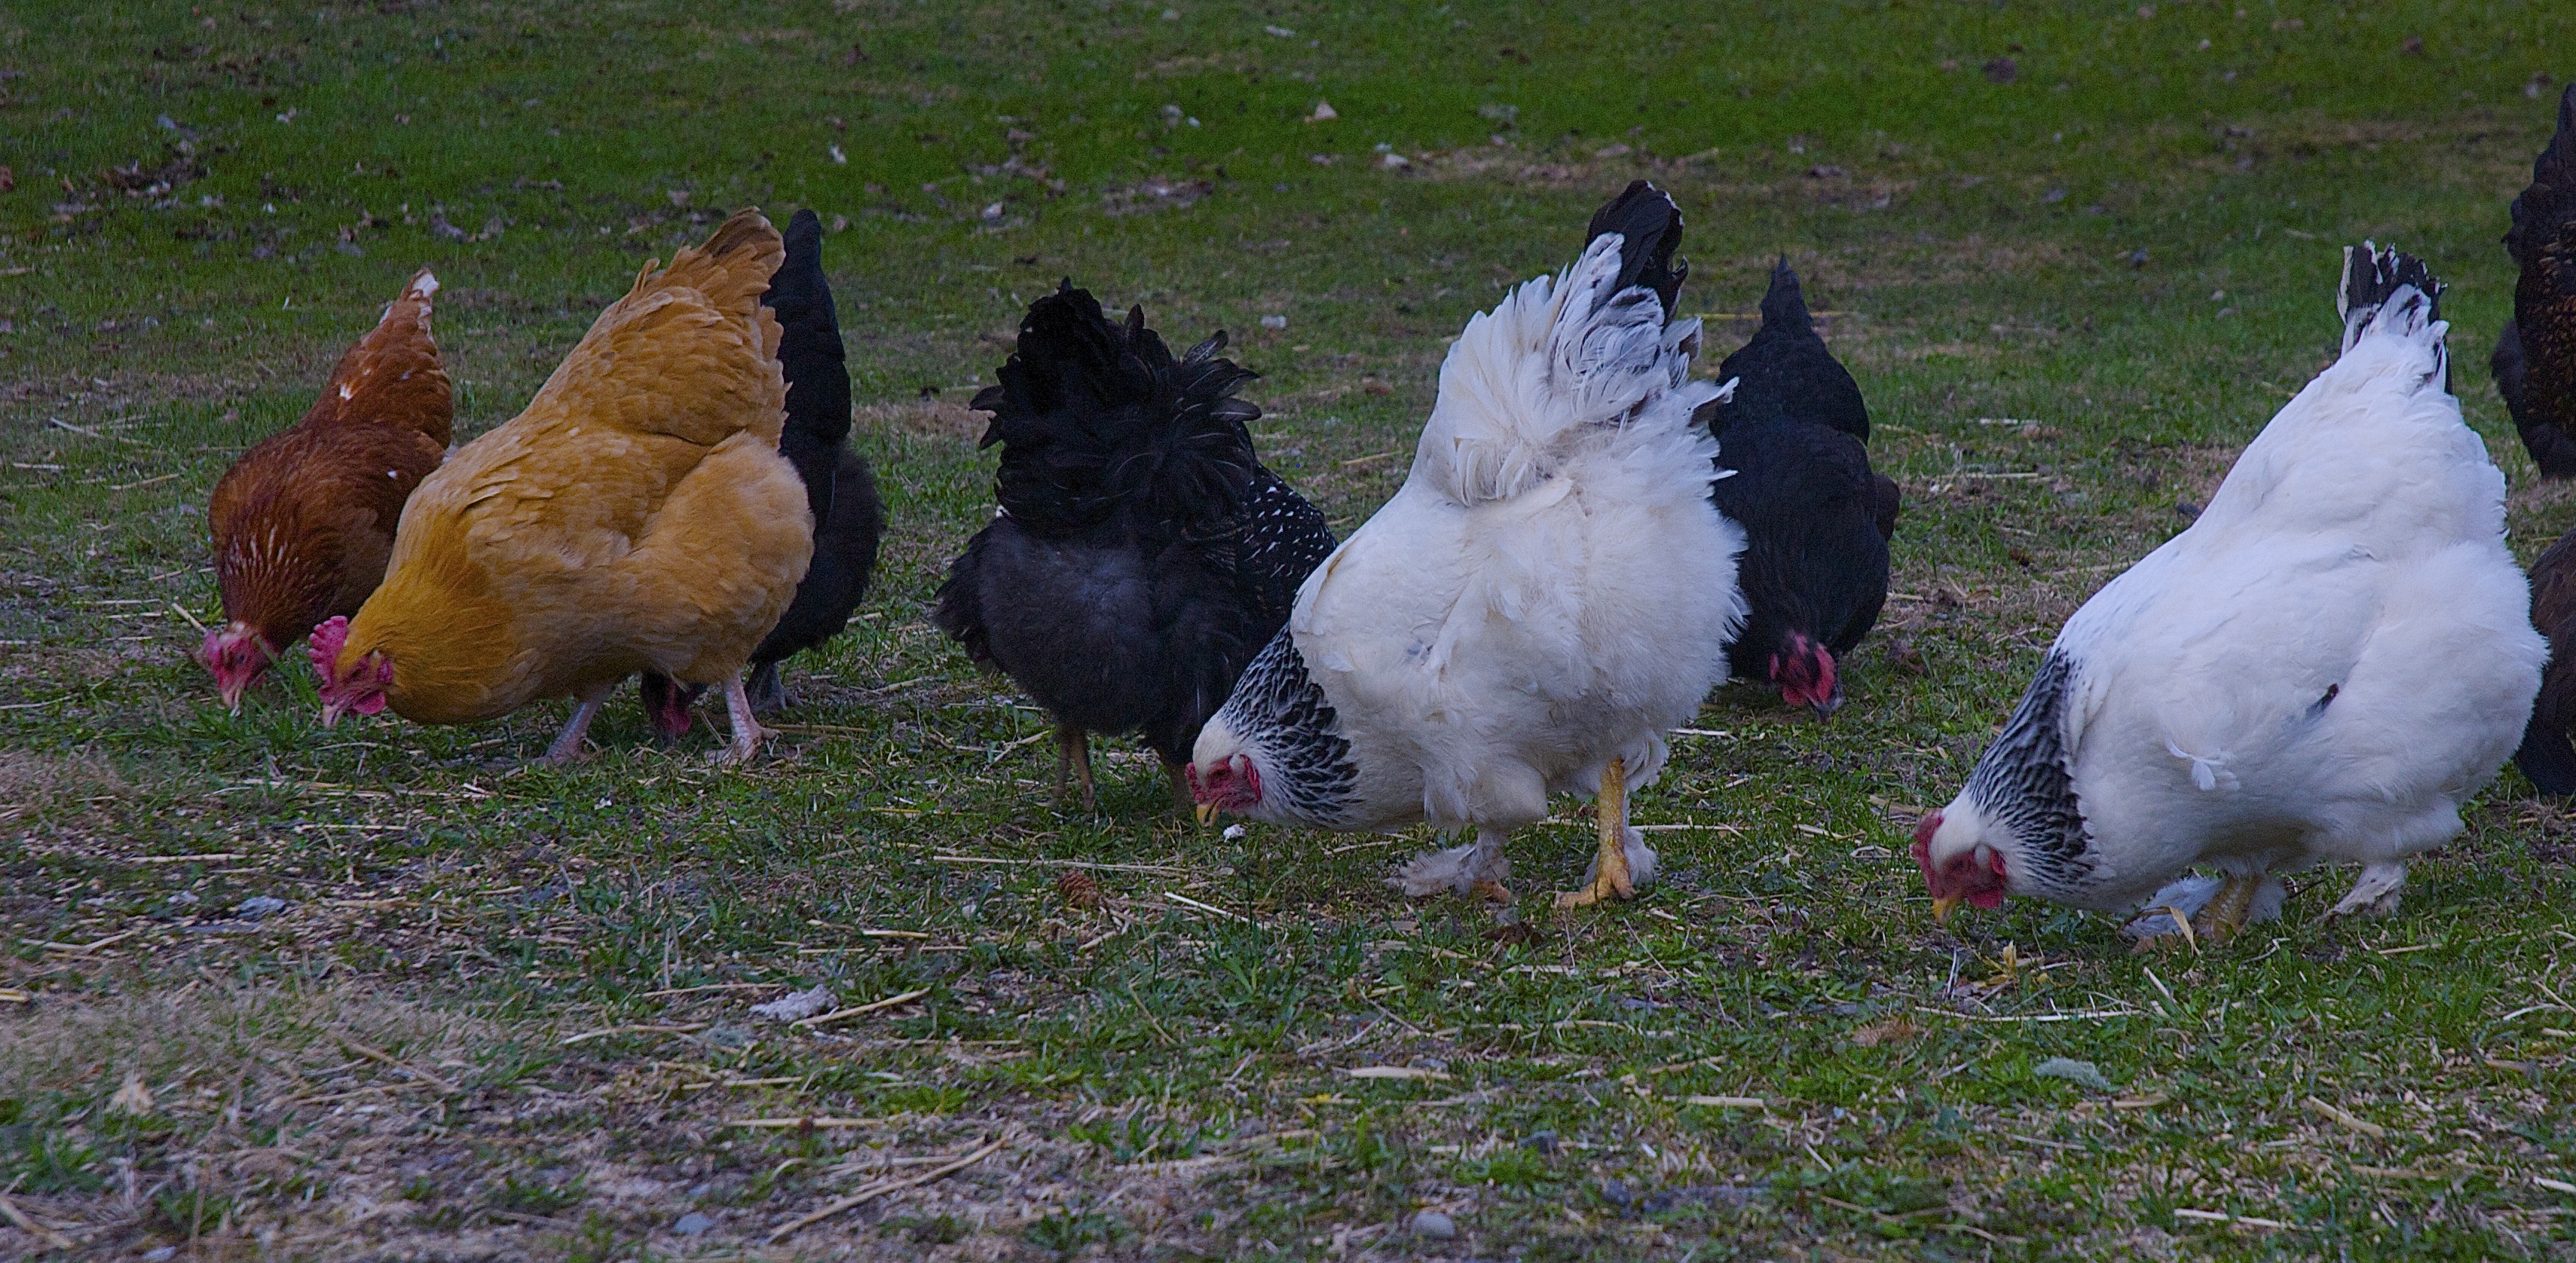 Jersey Giants: The Triple-Purpose Chicken